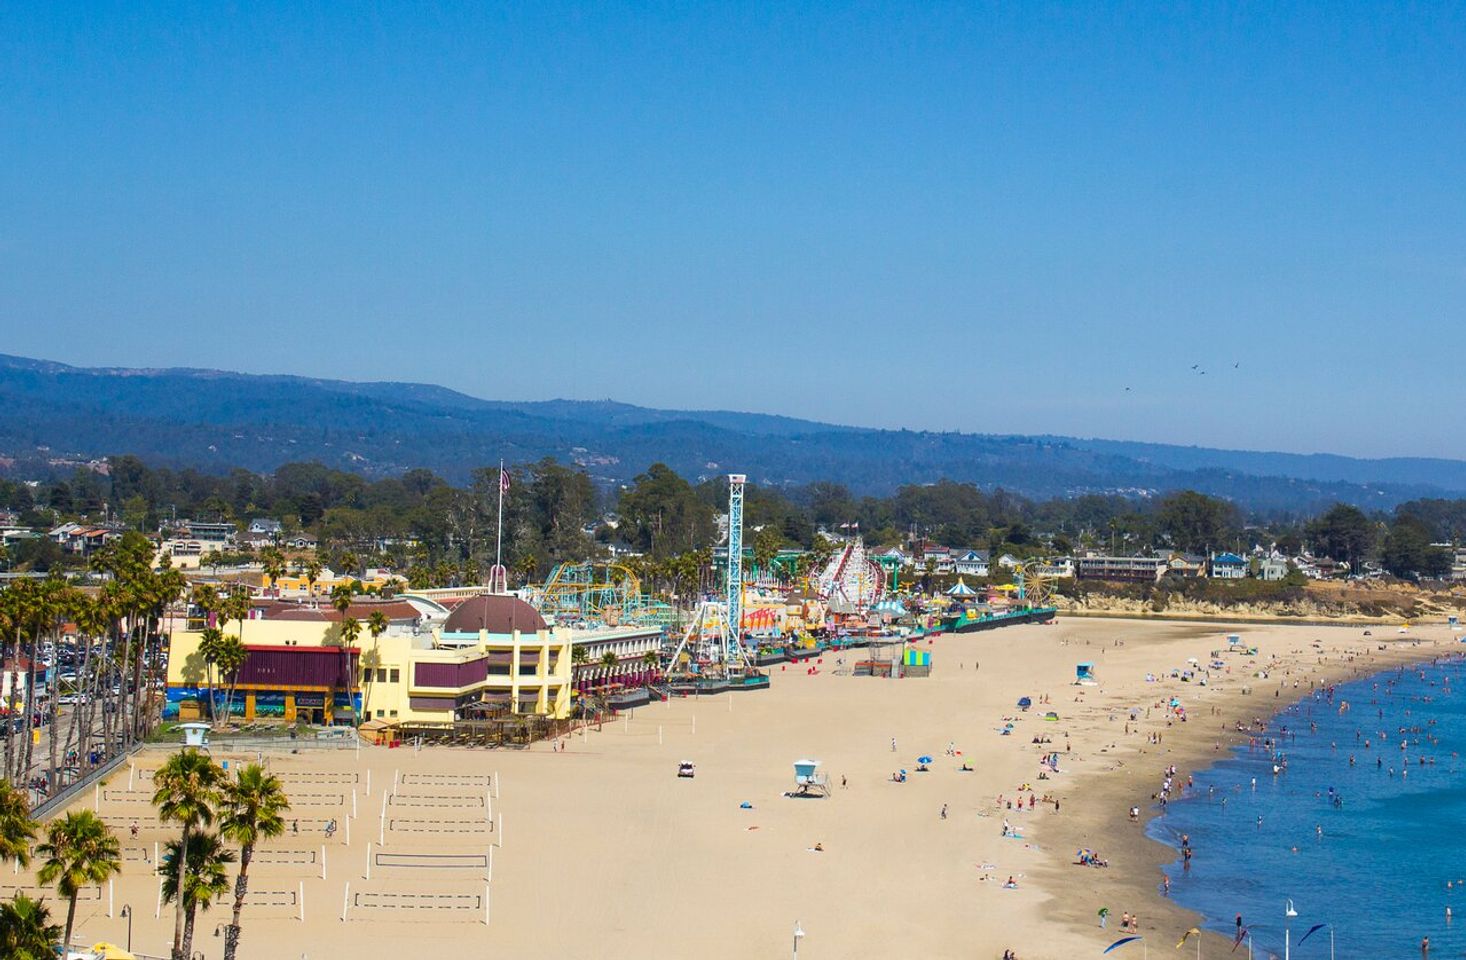 Thrills, Chills and Fun in the Sun: Santa Cruz Beach Boardwalk!